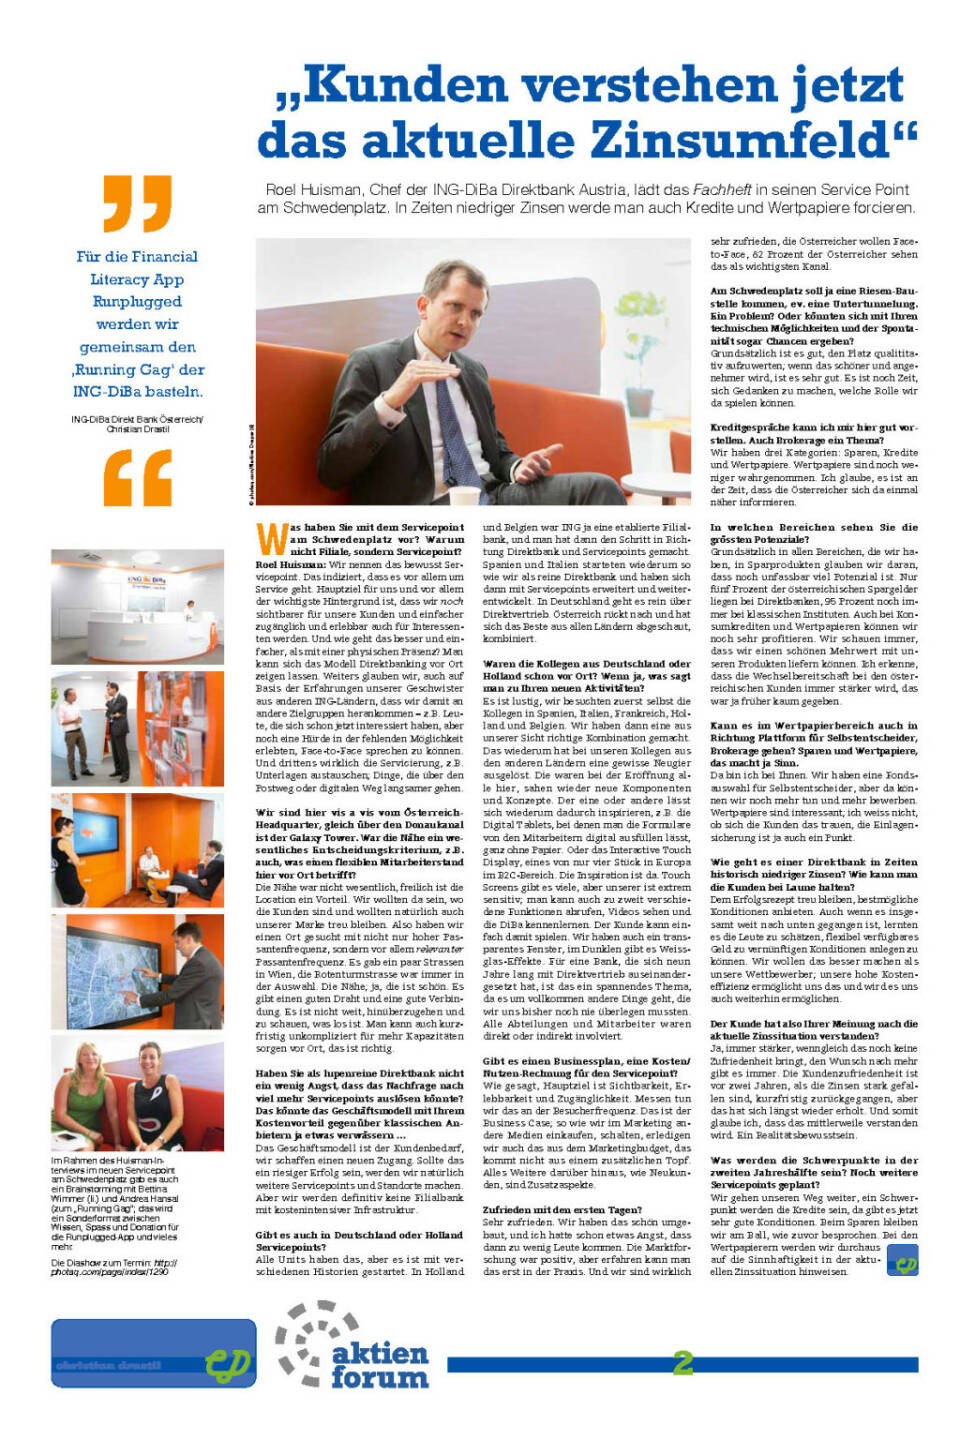 „Kunden verstehen jetzt das aktuelle Zinsumfeld“, ING-DiBa Direktbank Austria, Roel Huisman